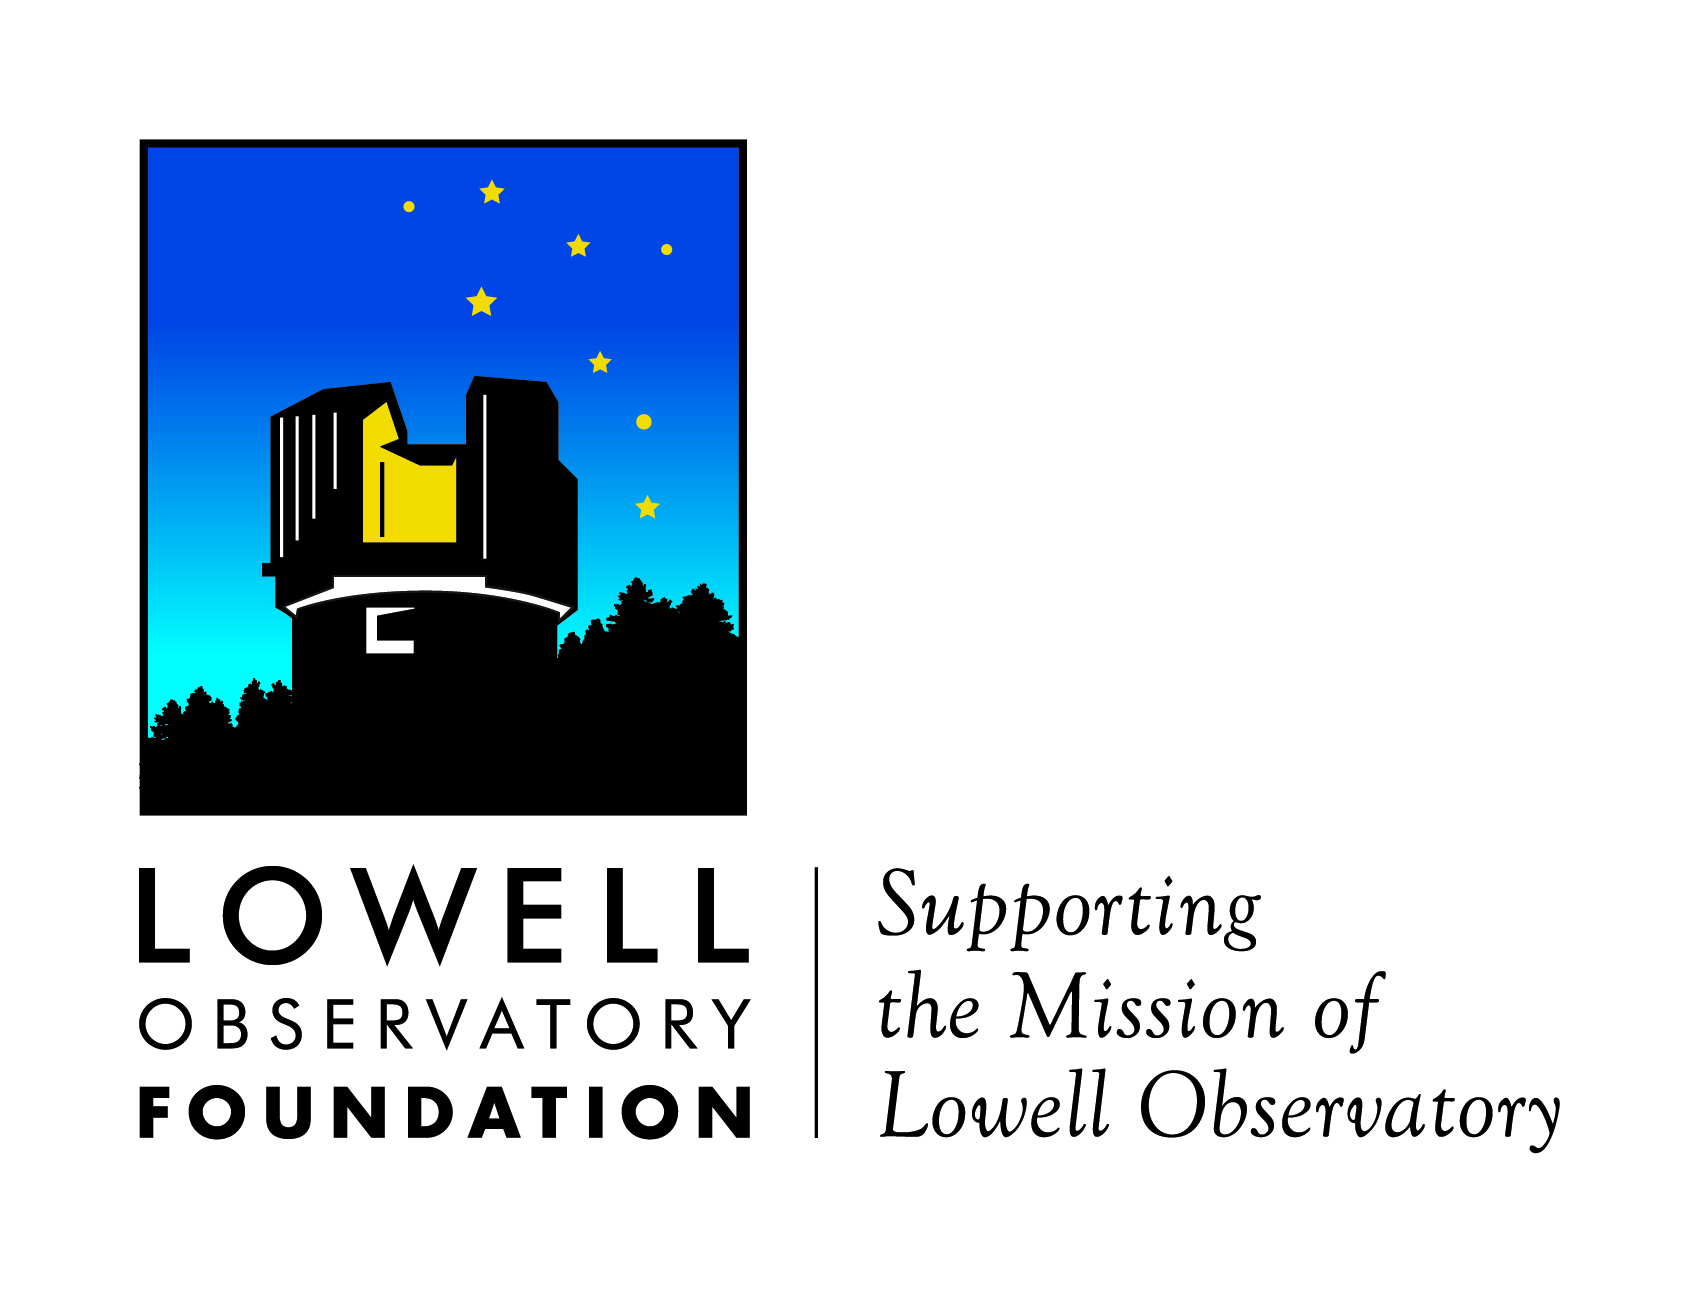 Lowell Observatory Foundation logo